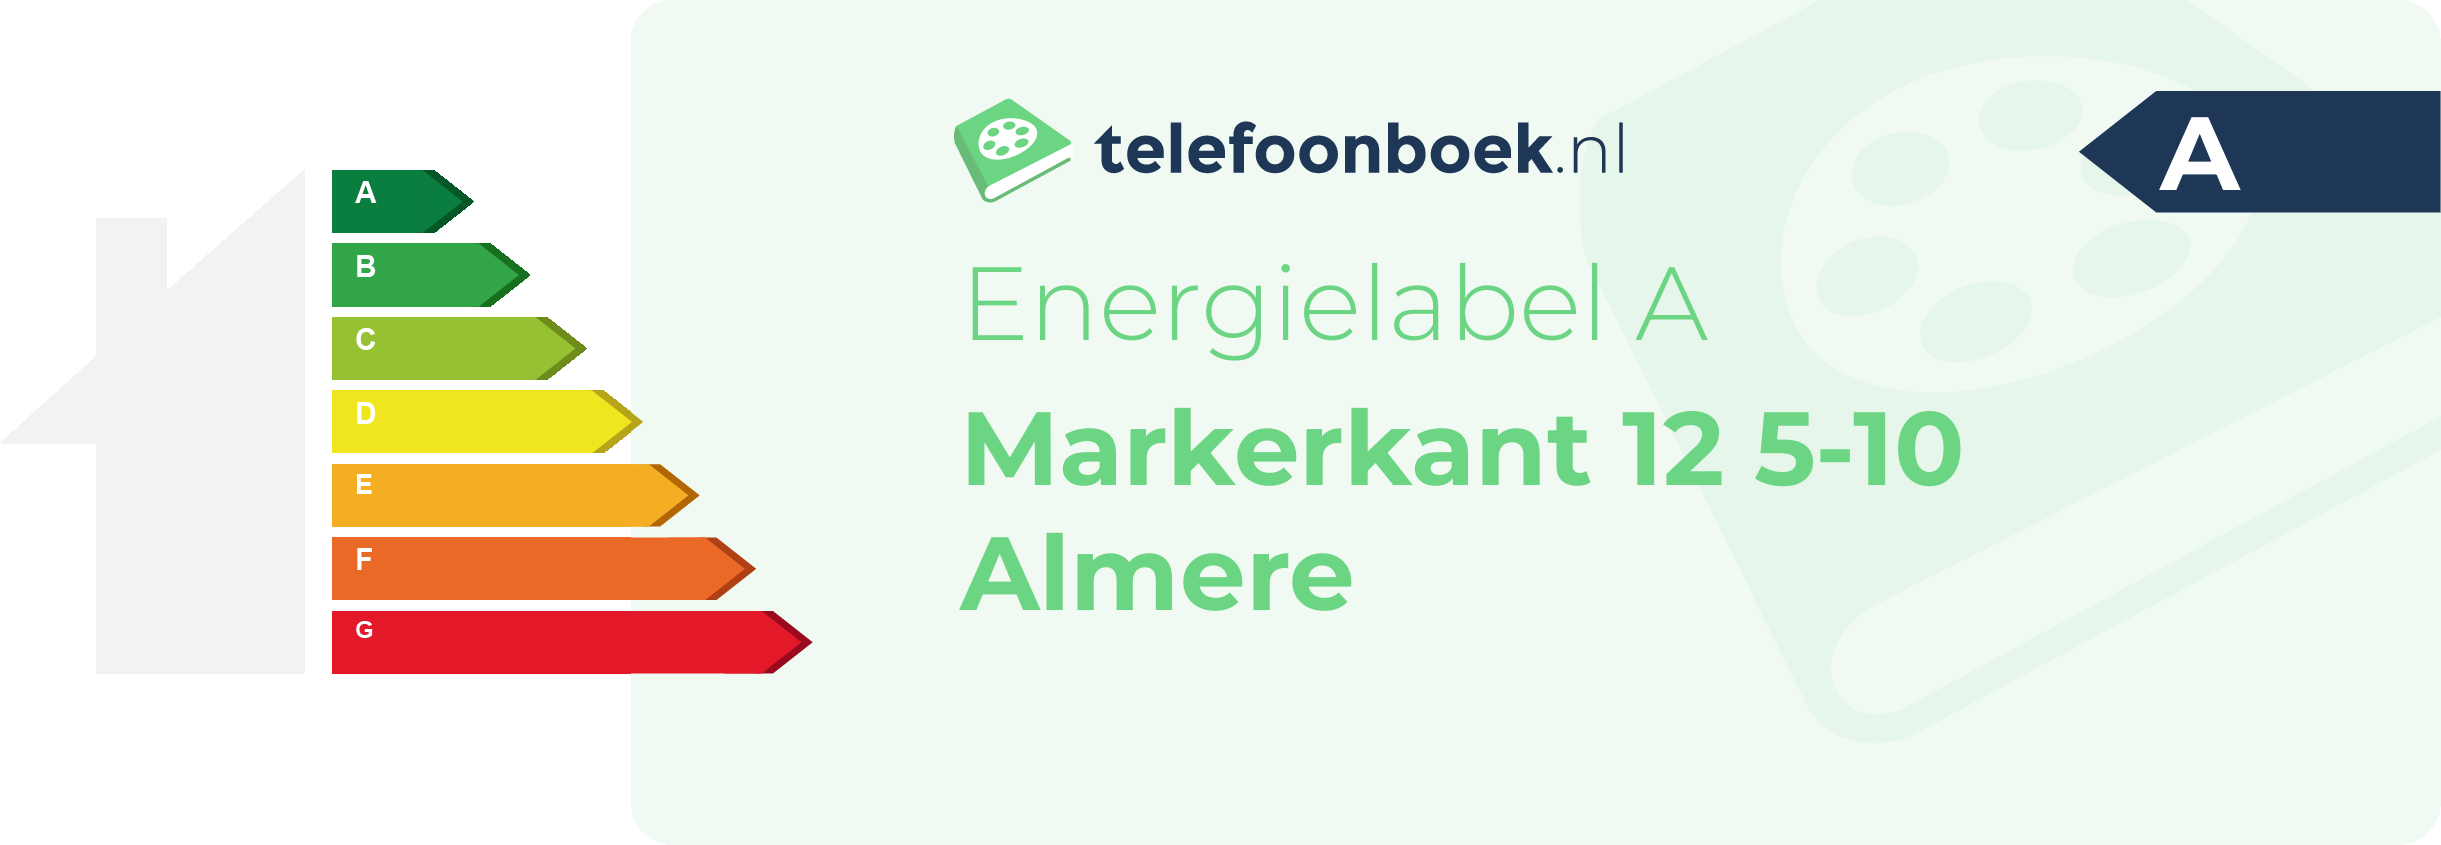 Energielabel Markerkant 12 5-10 Almere